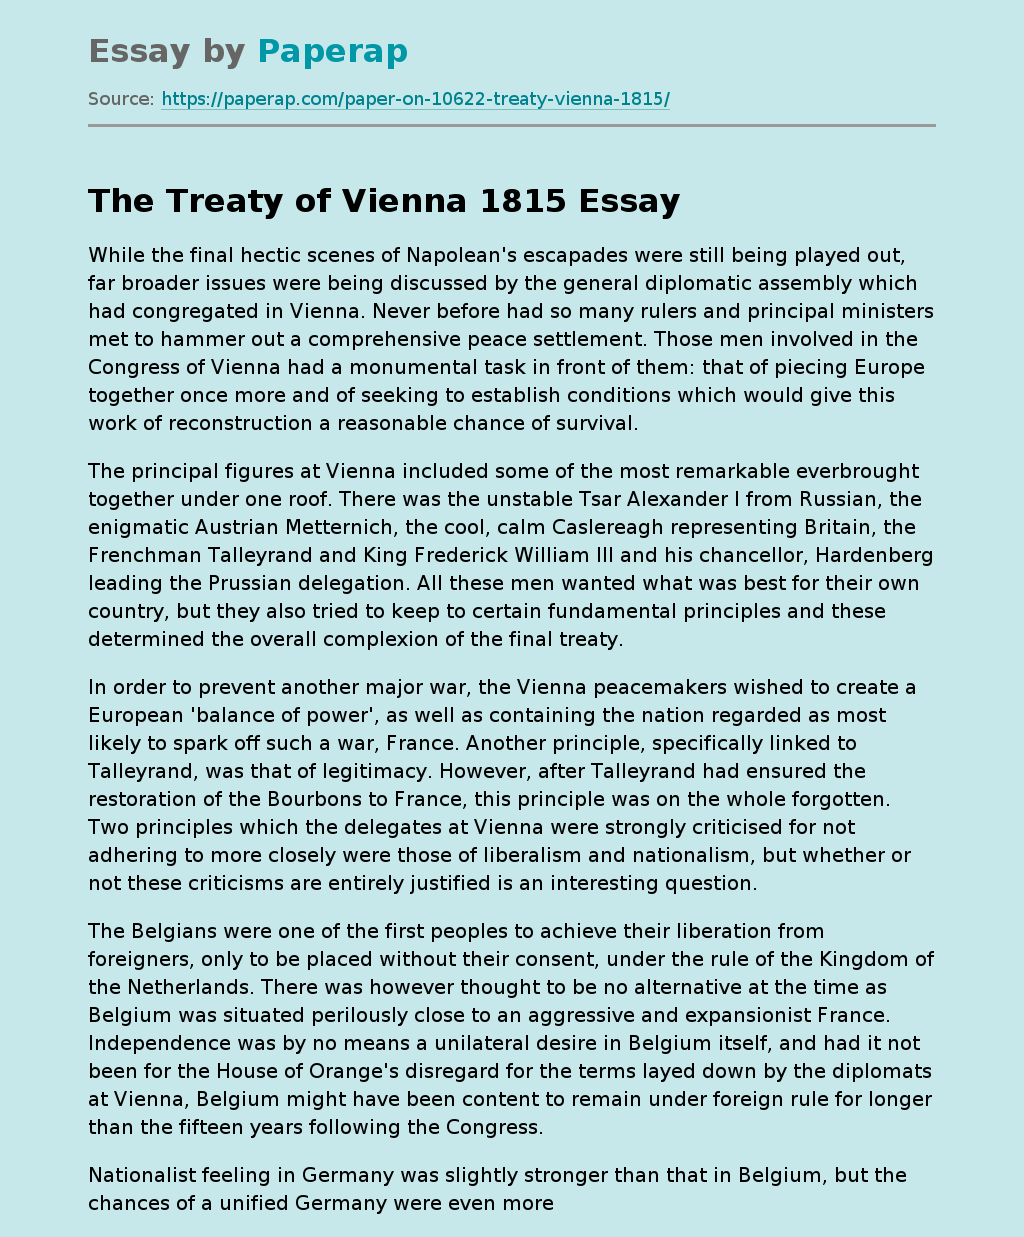 The Treaty of Vienna 1815